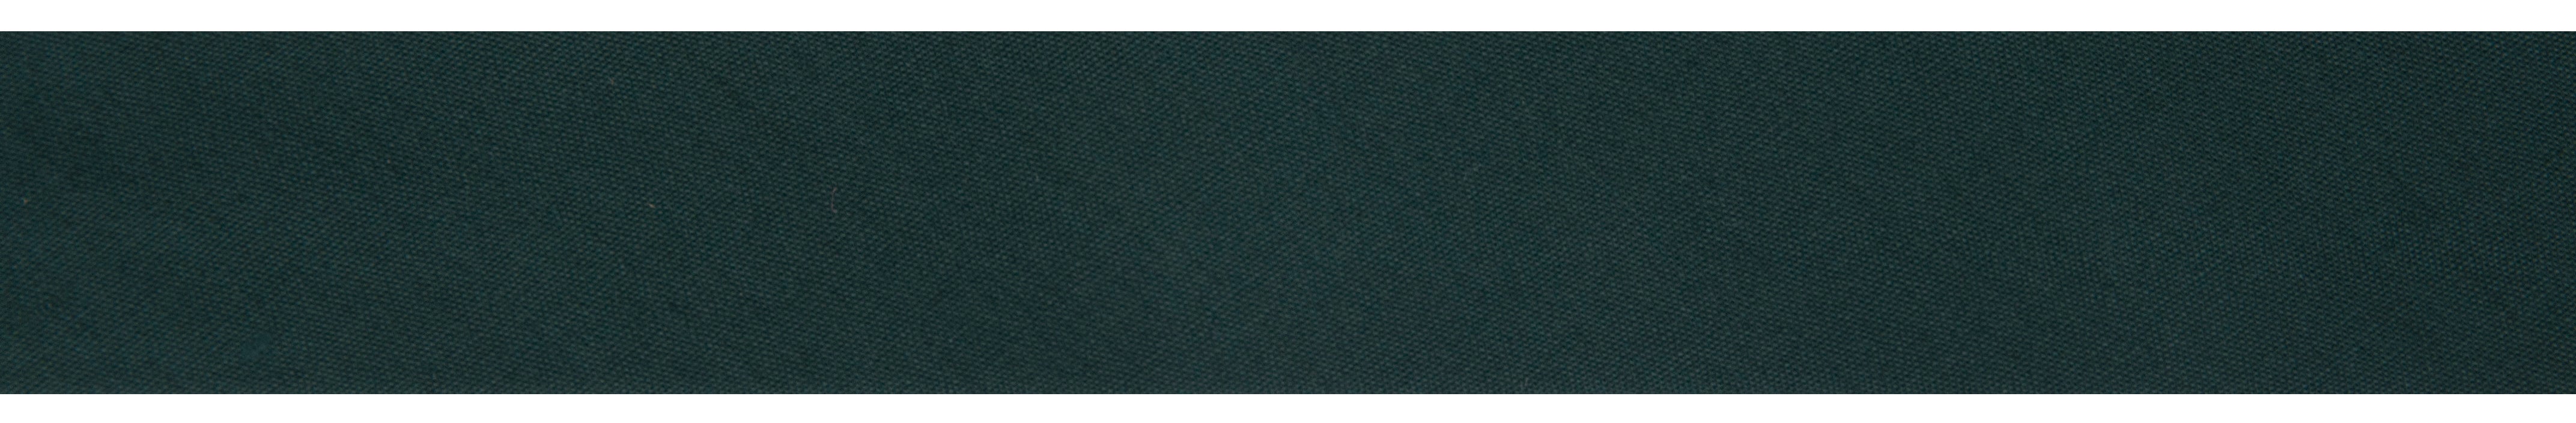 Dark Green Bias Binding | Narrow from Jaycotts Sewing Supplies